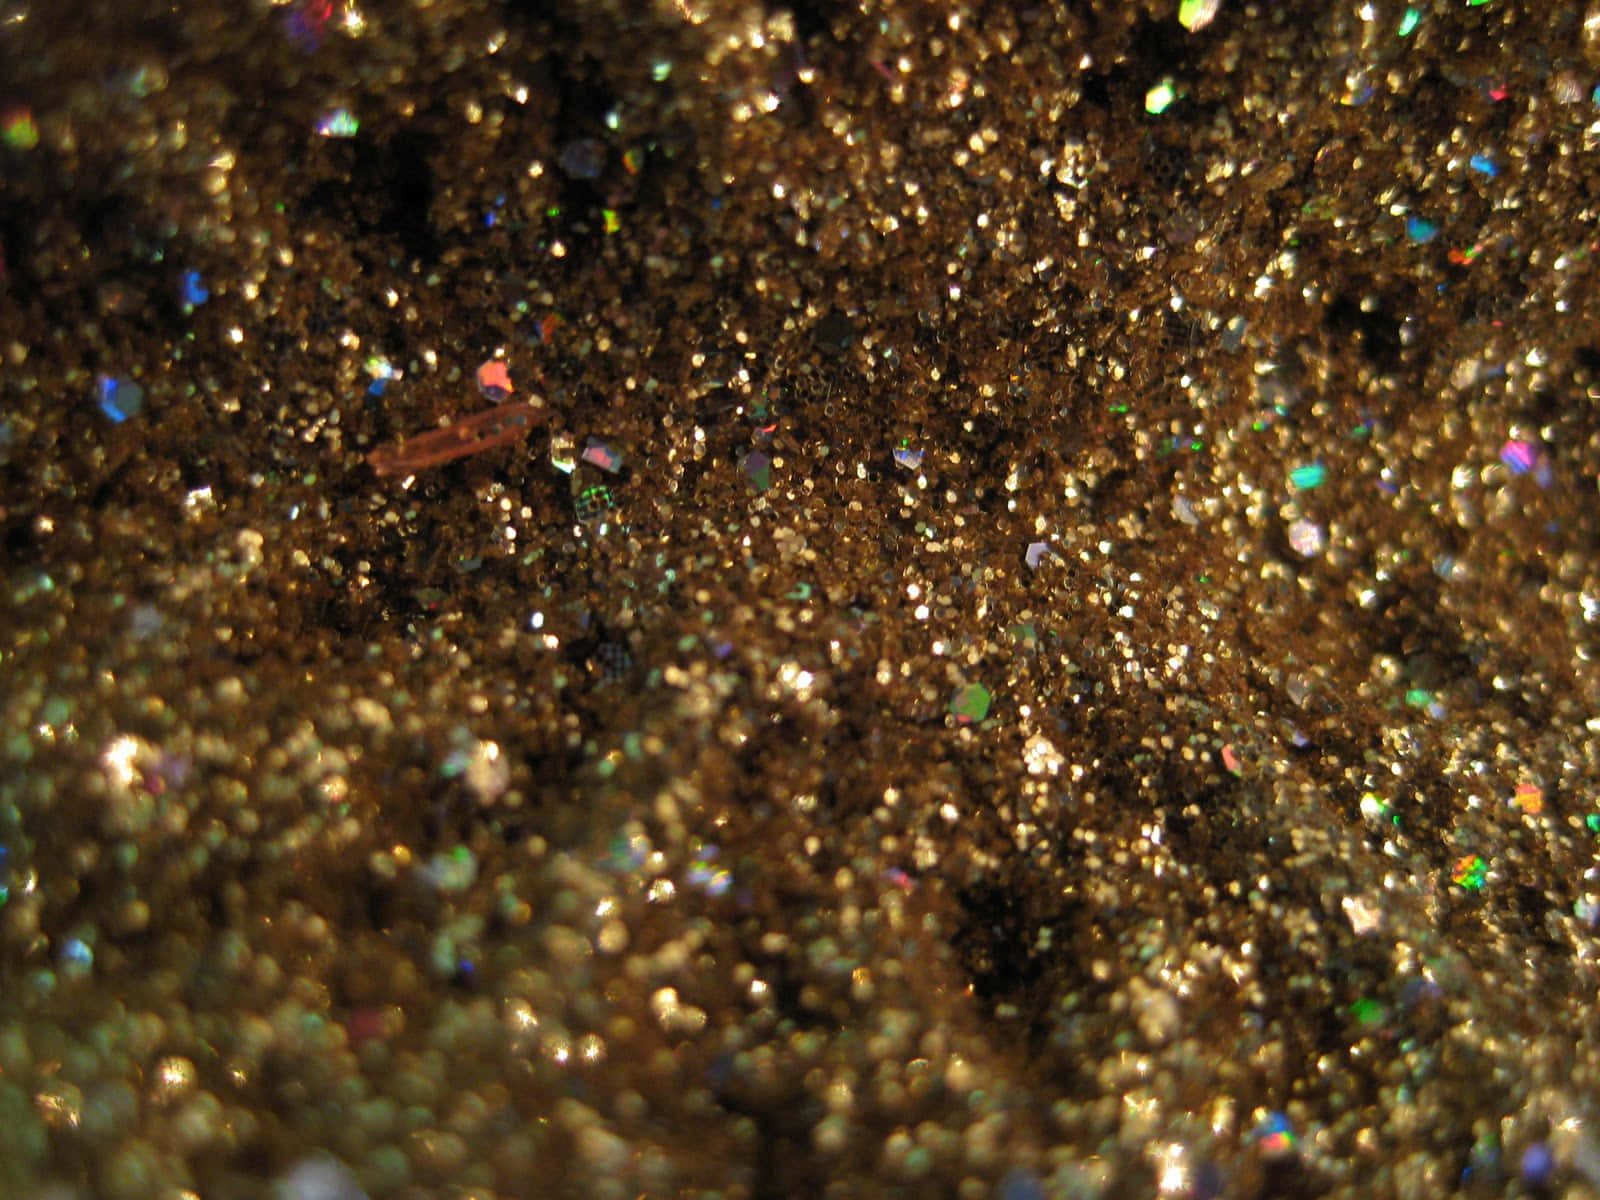 gold glitter backgrounds tumblr